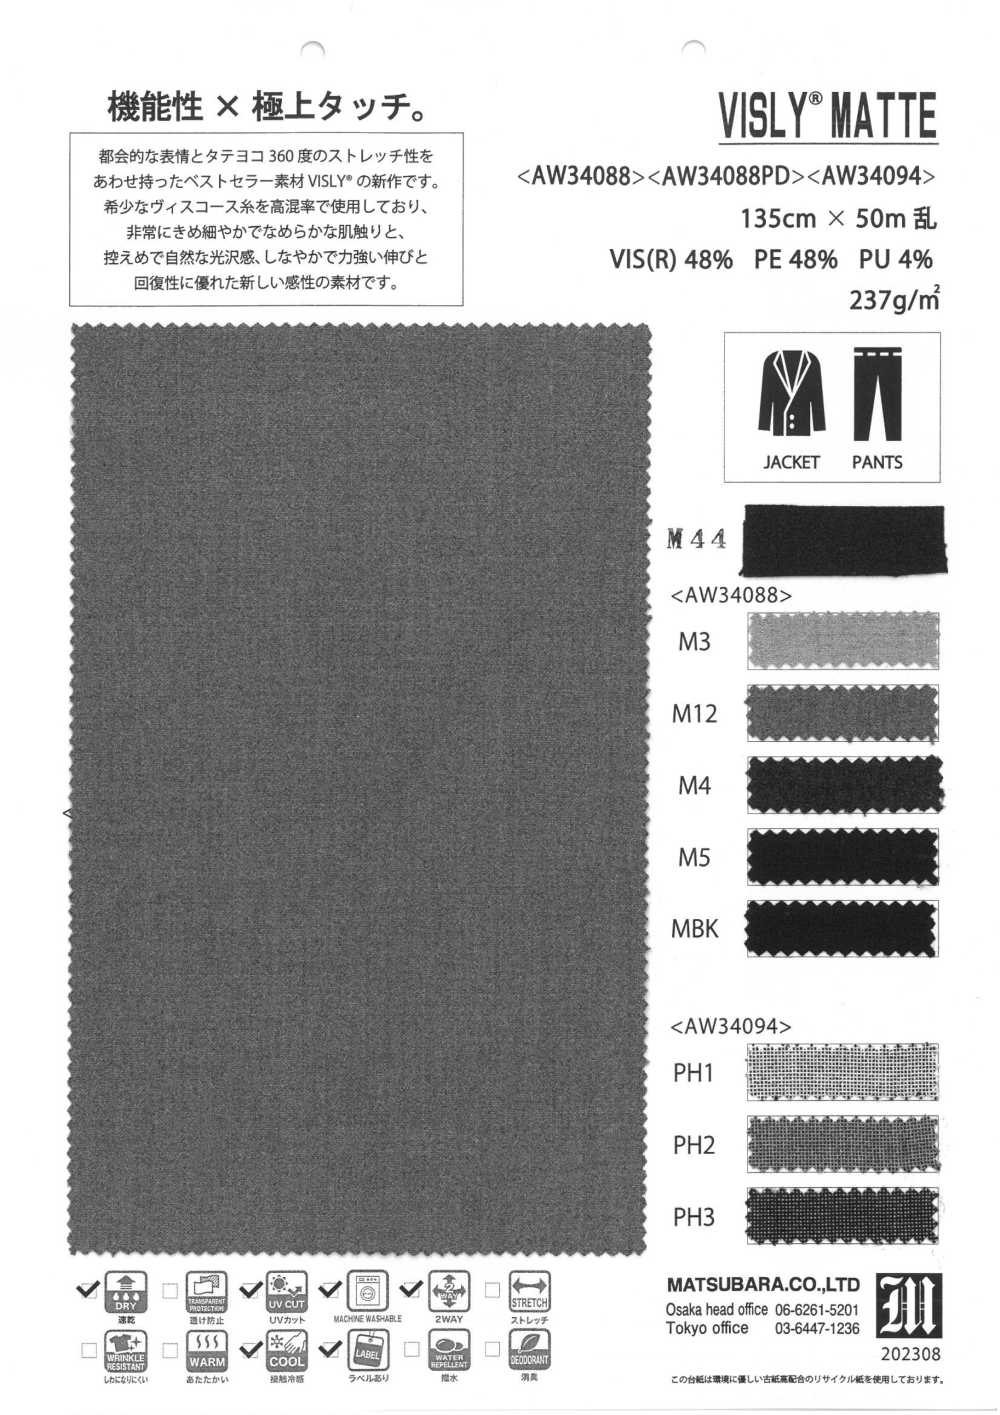 AW34088 Bisley Mat[Fabrica Textil] Matsubara